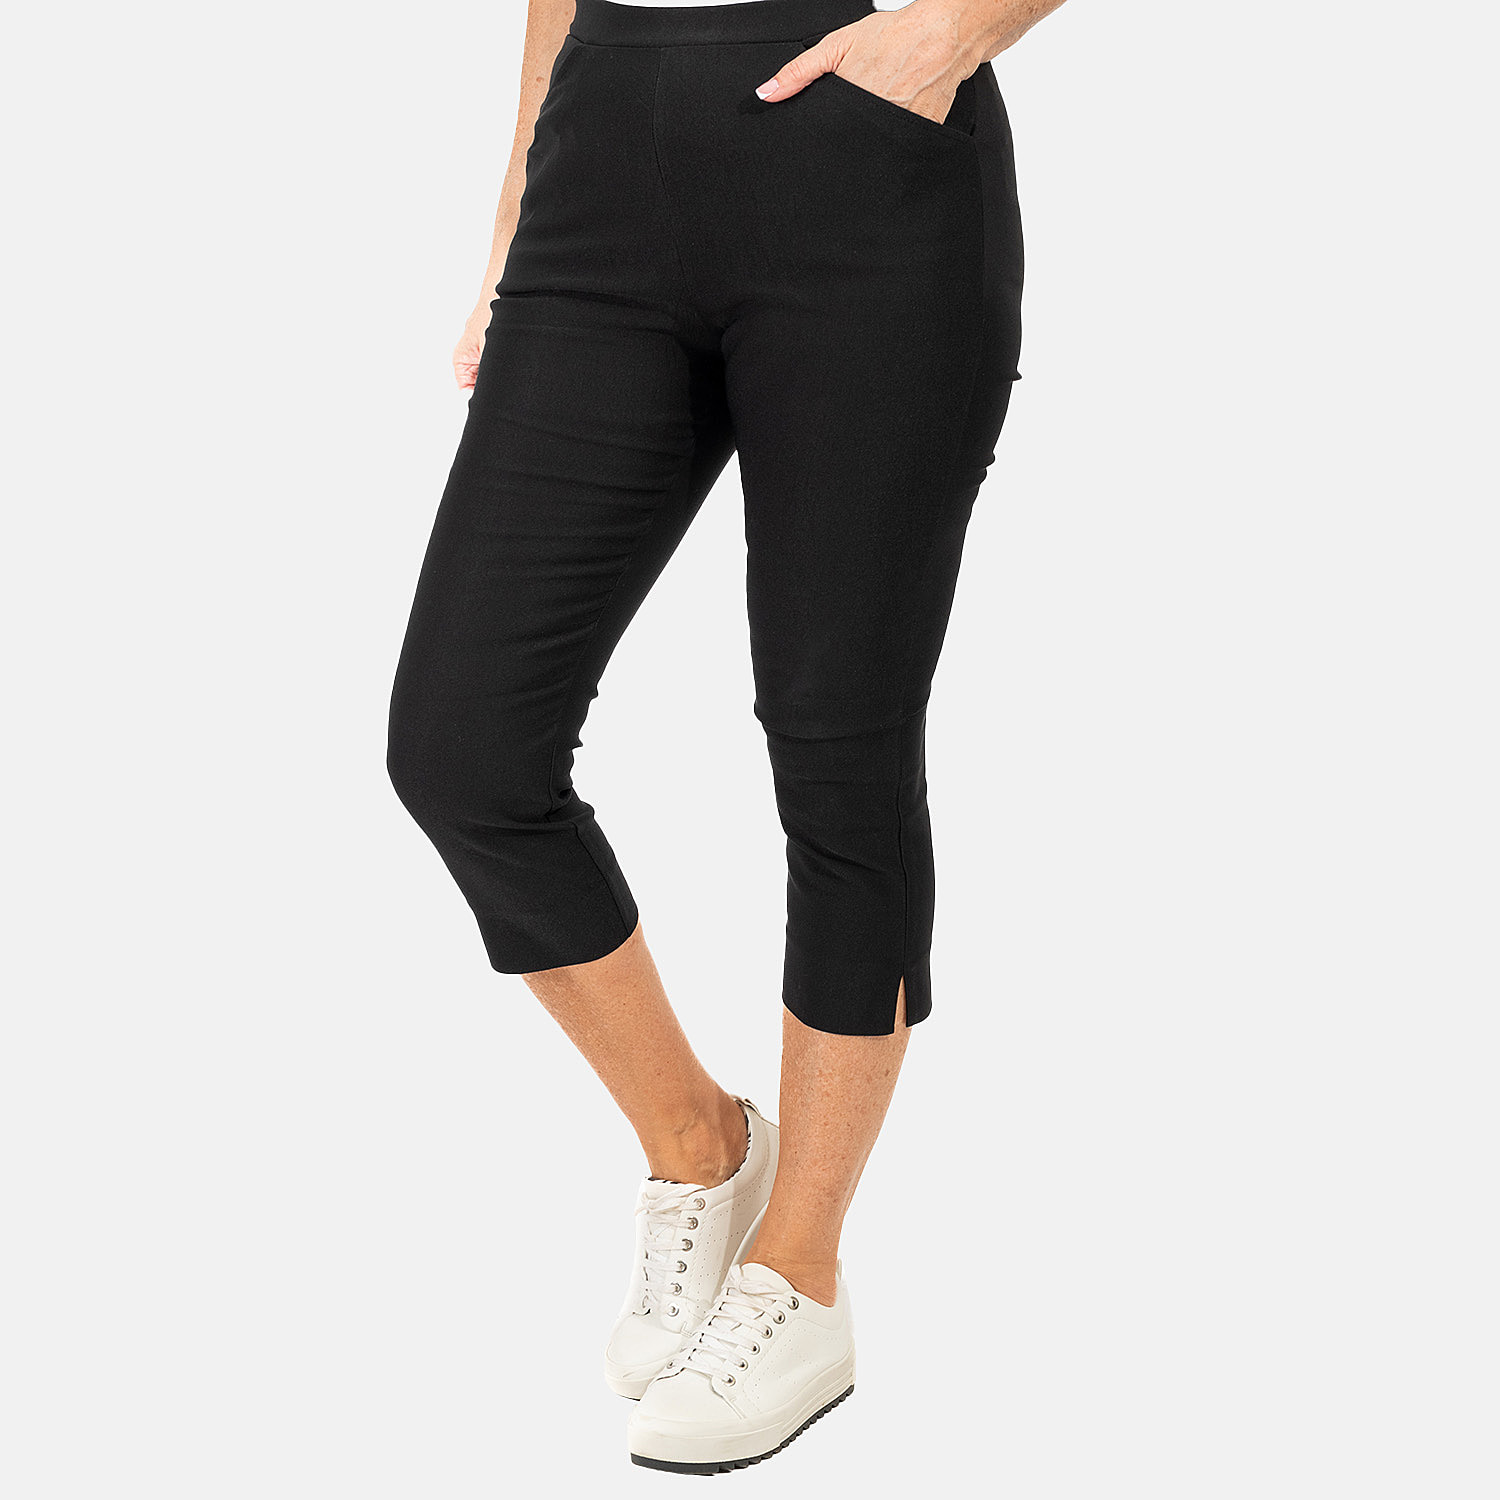 Viscose-Jean-and-Pant-Trouser-Size-1x1-cm-Black